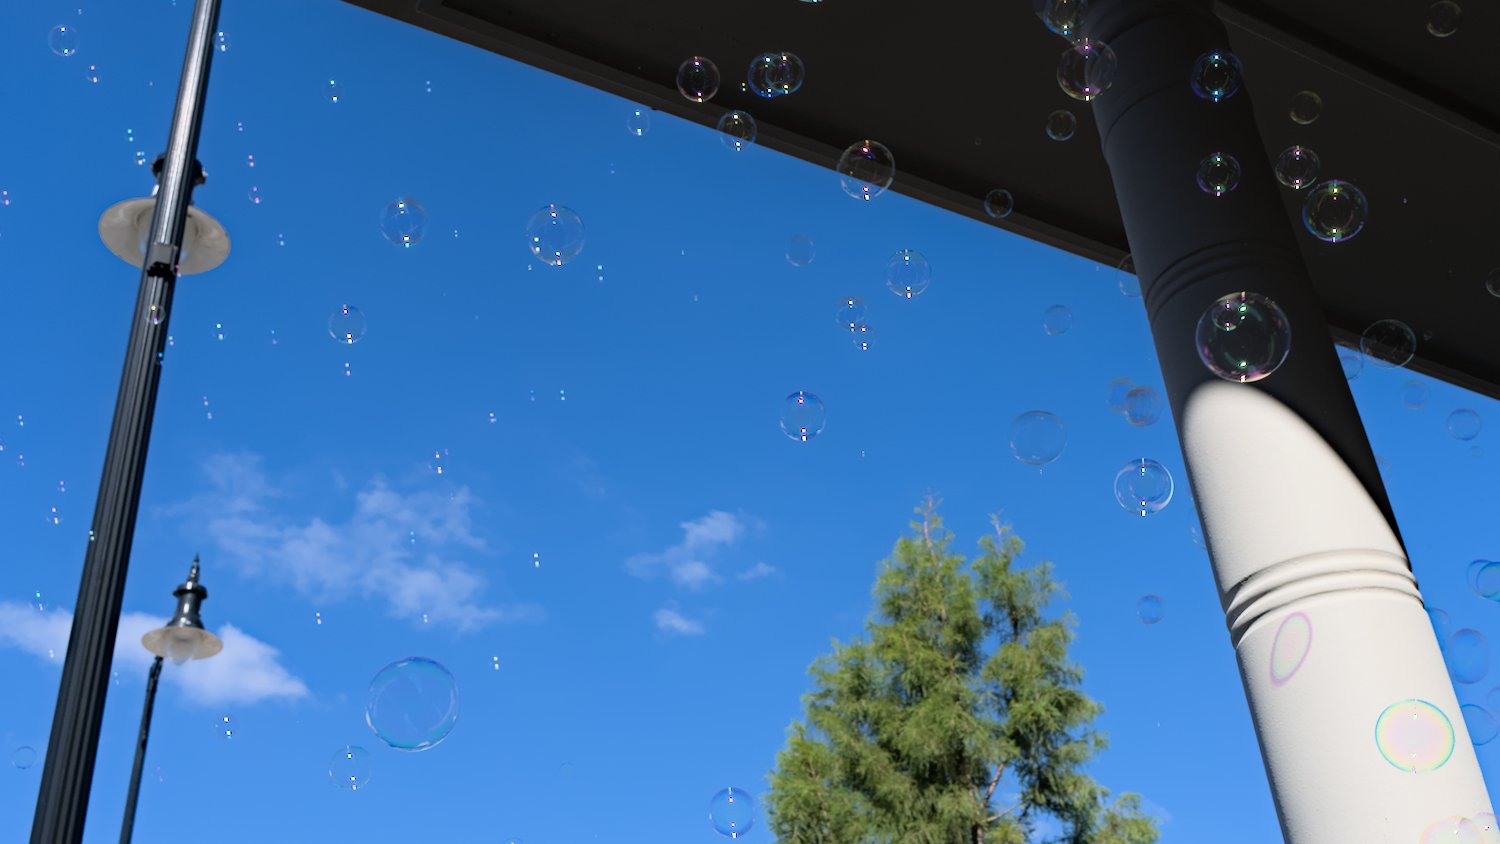 Bubbles from a bubble machine.